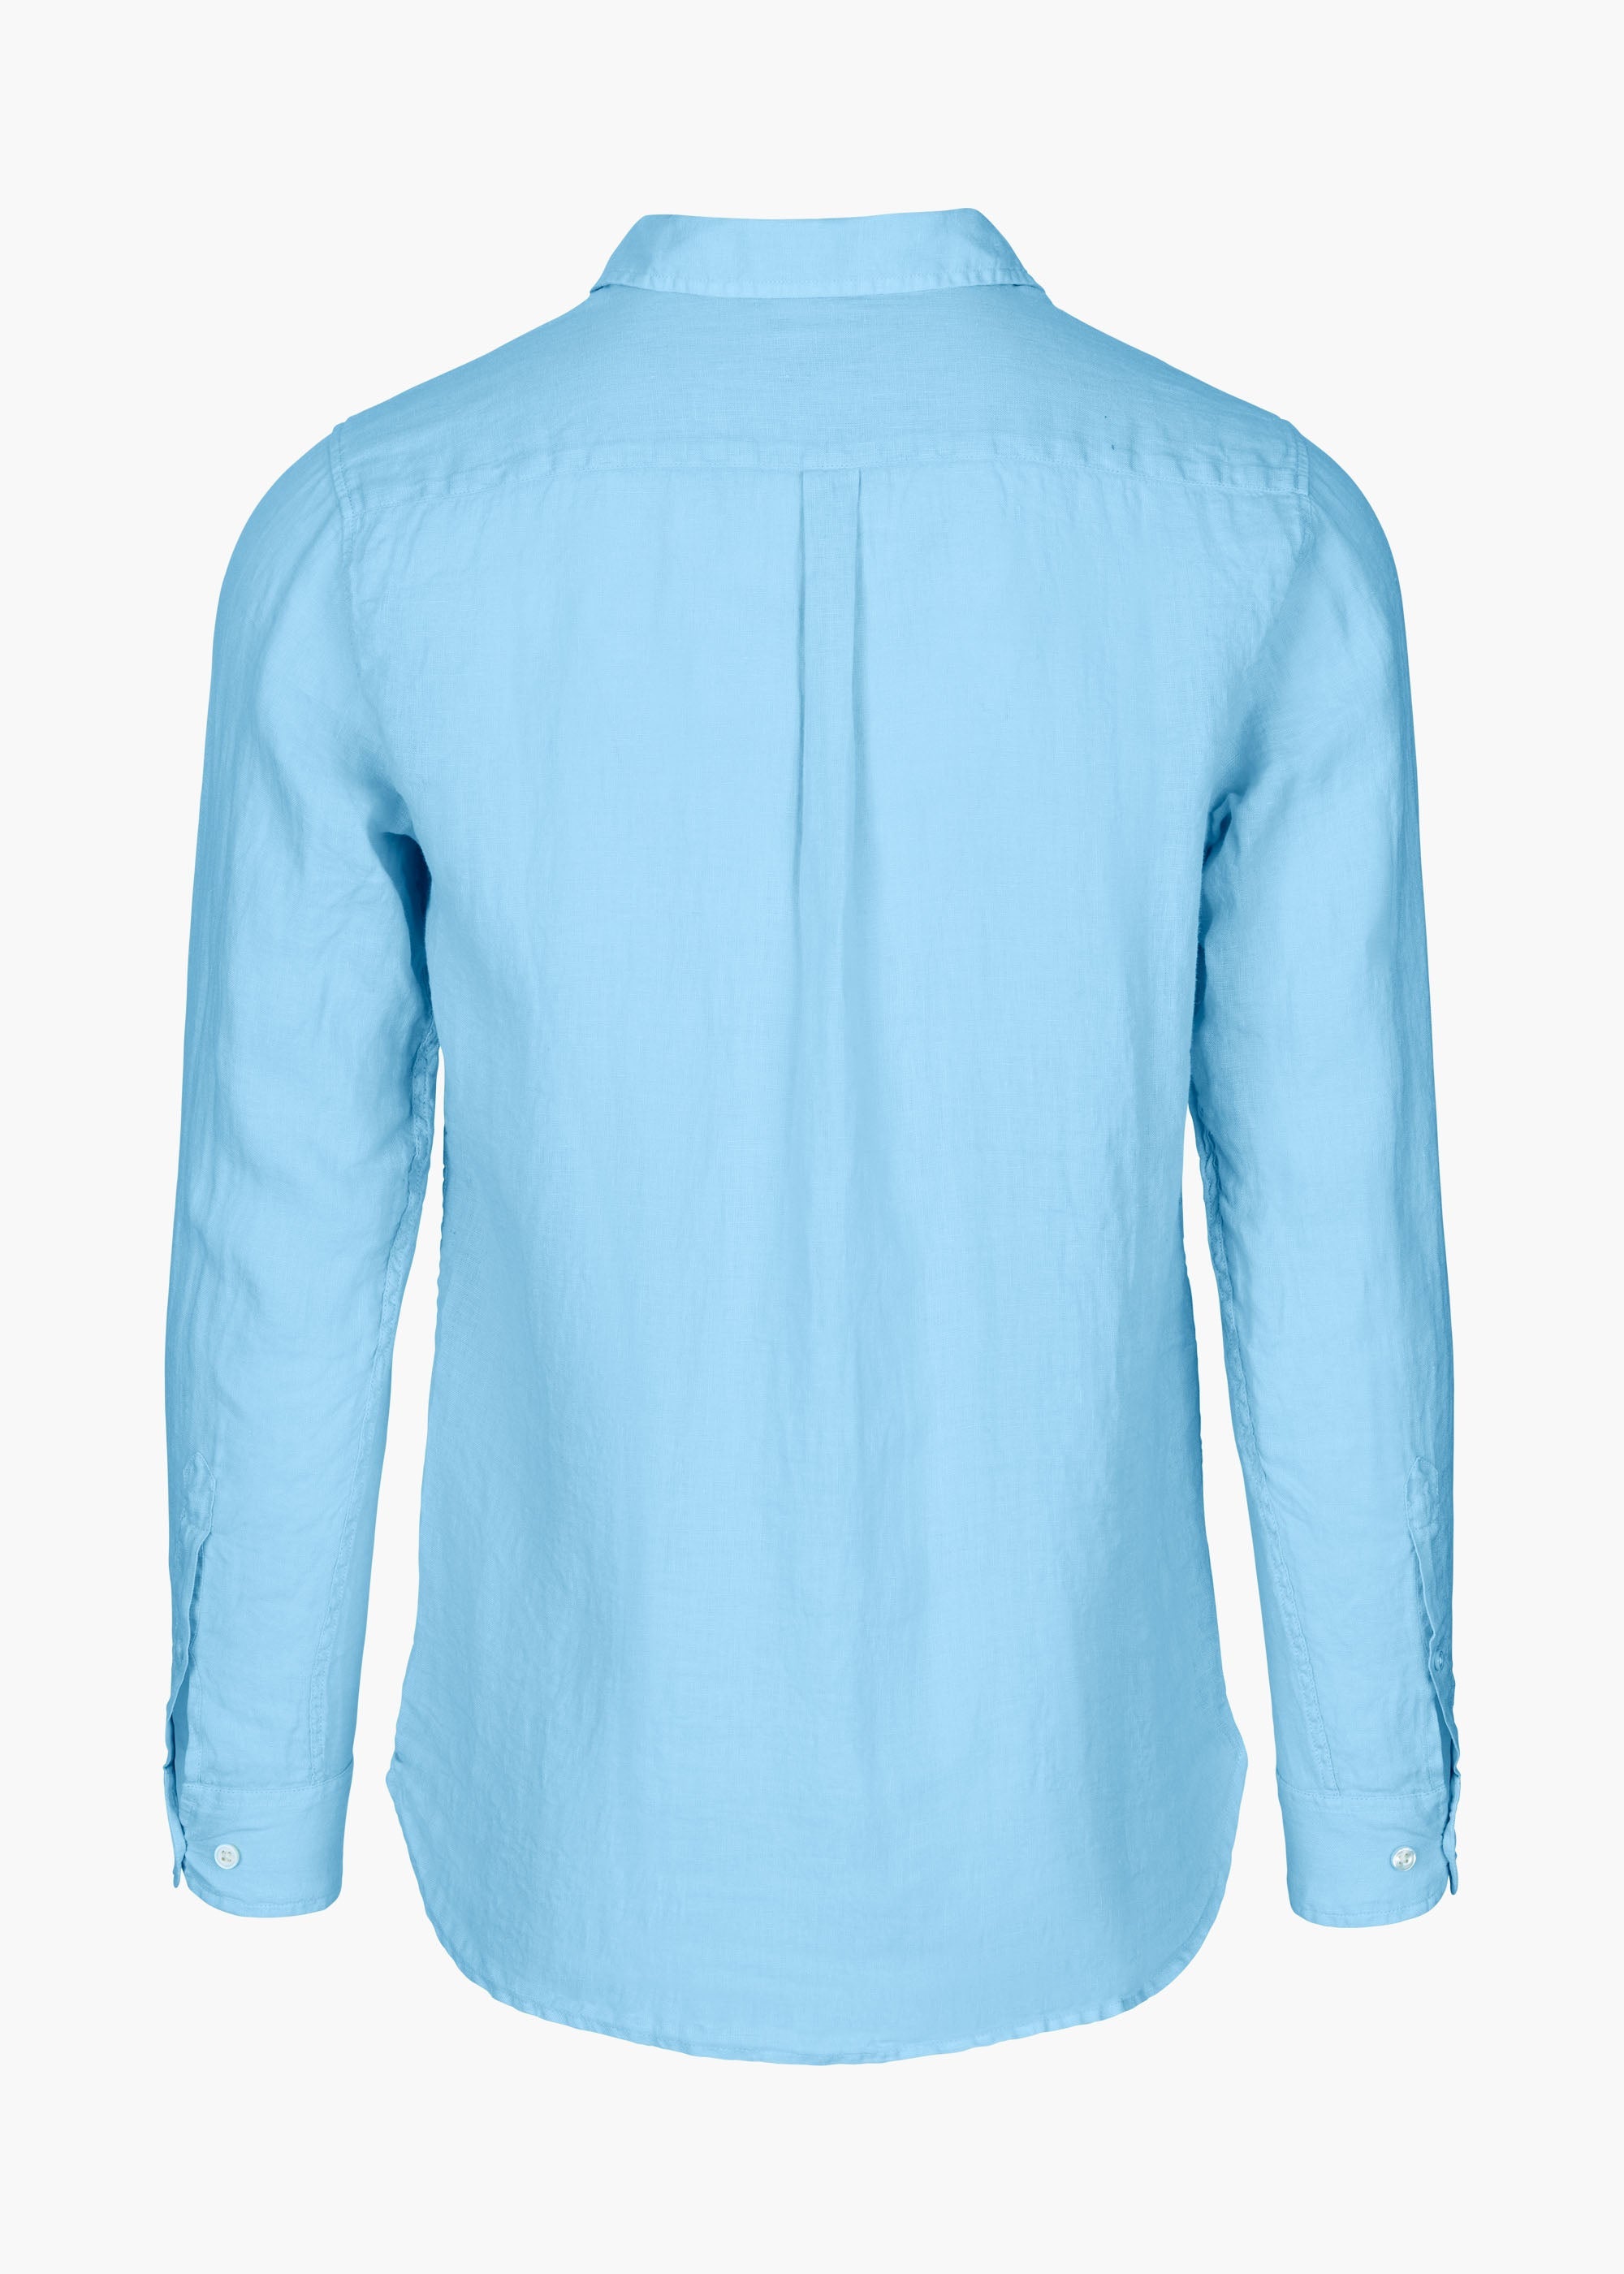 Amalfi Linen Shirt - background::white,variant::Spray Blue